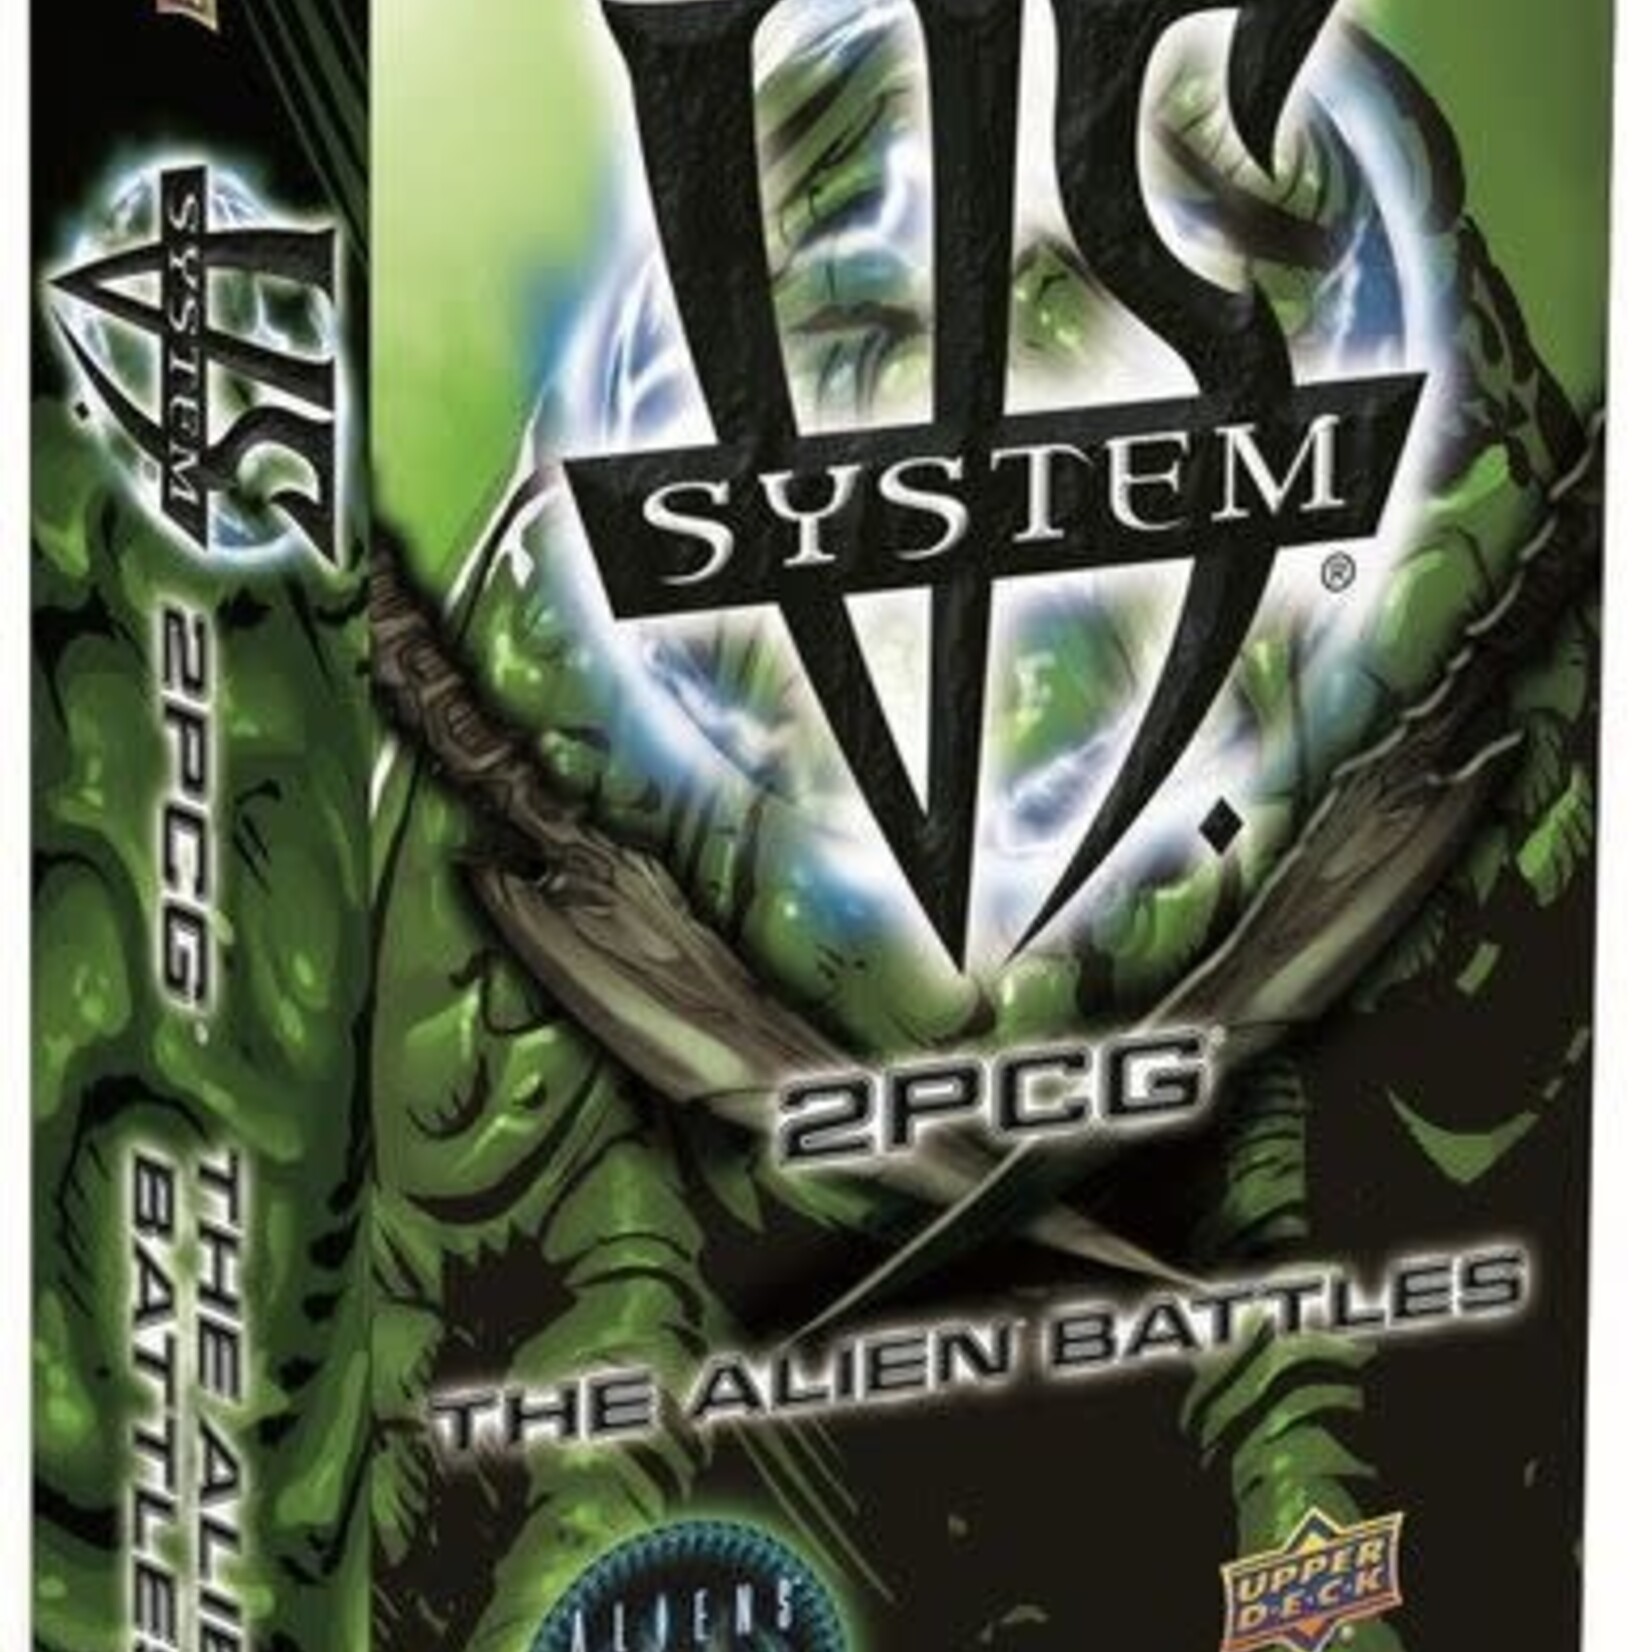 Upper Deck Entertainment VS System 2PCG: The ALIEN Battles